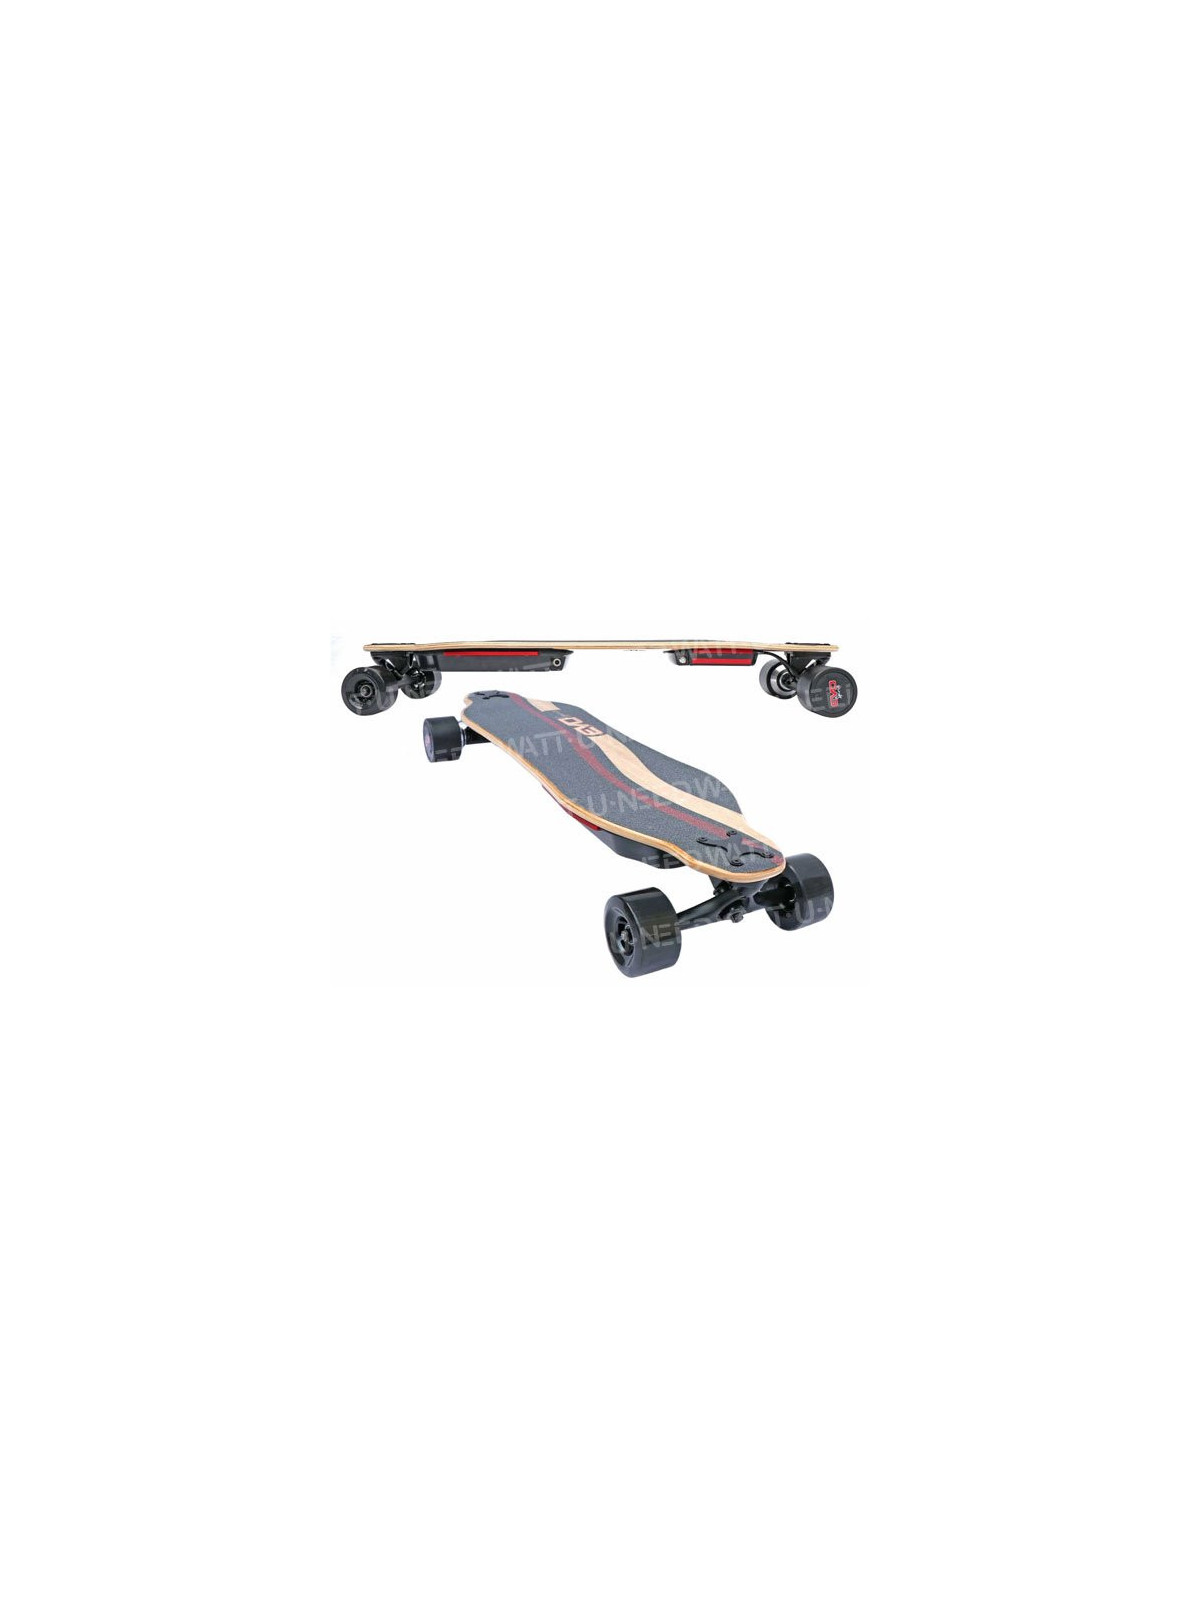 Interruptor eléctrico EVO de skateboard HP